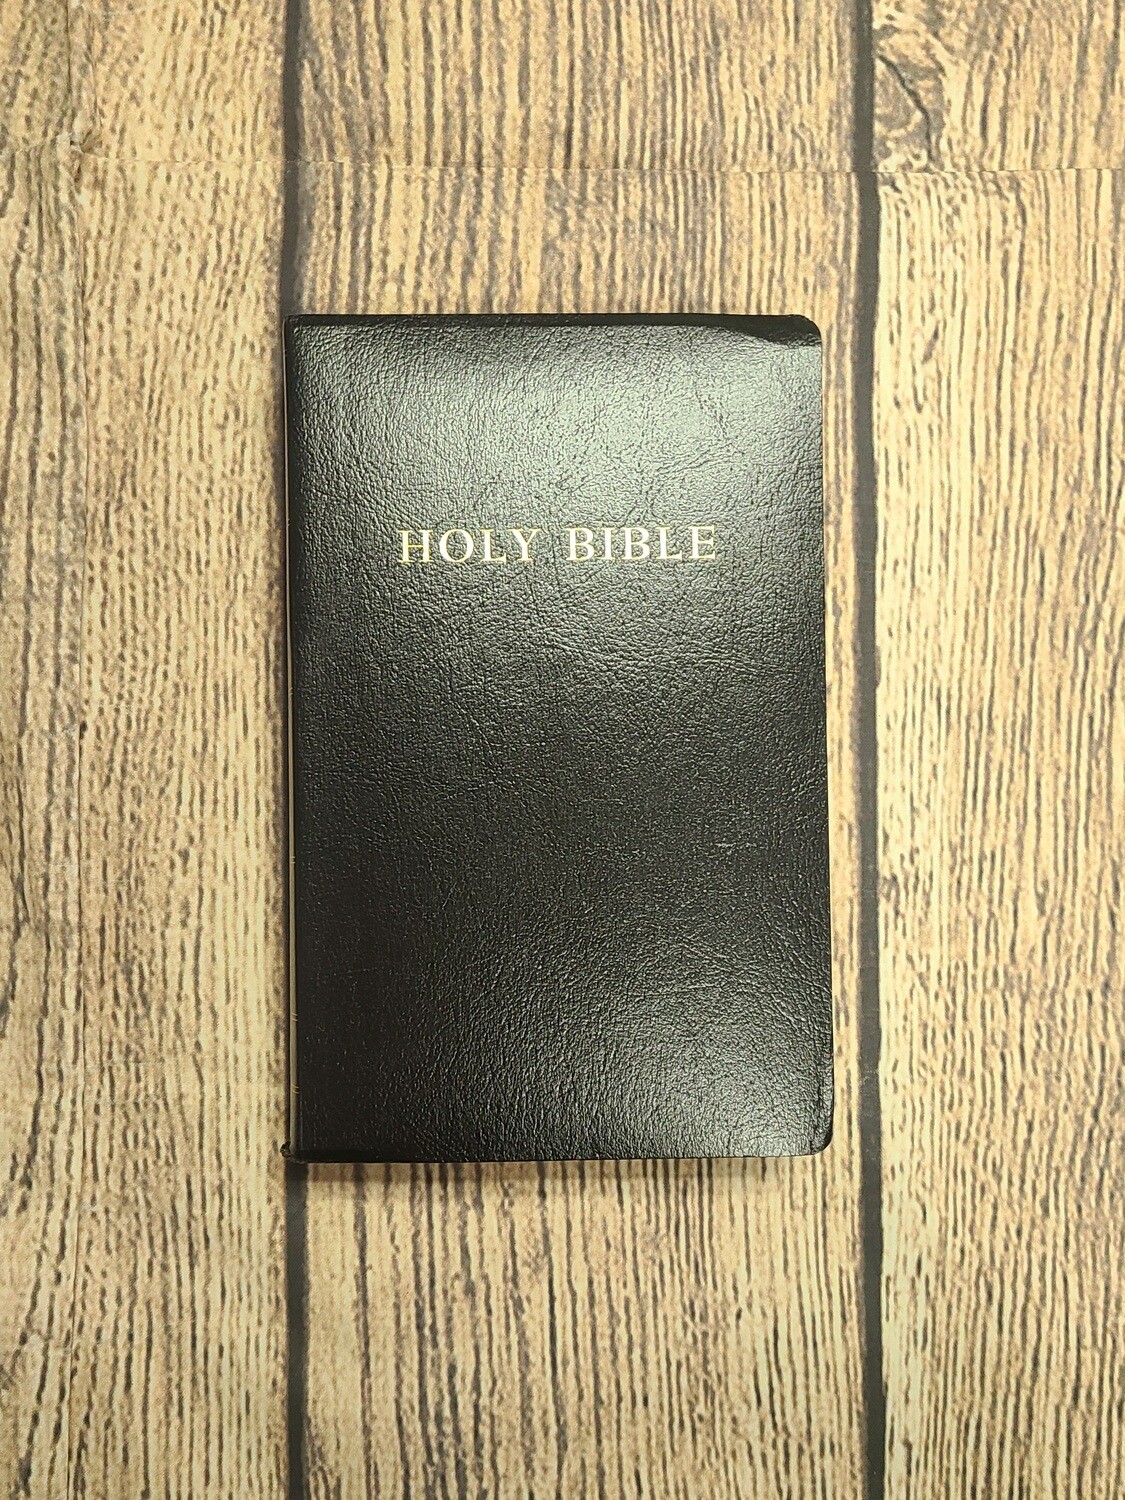 KJV Personal Reference Giant Print Size Bible - Black Imitation Leather